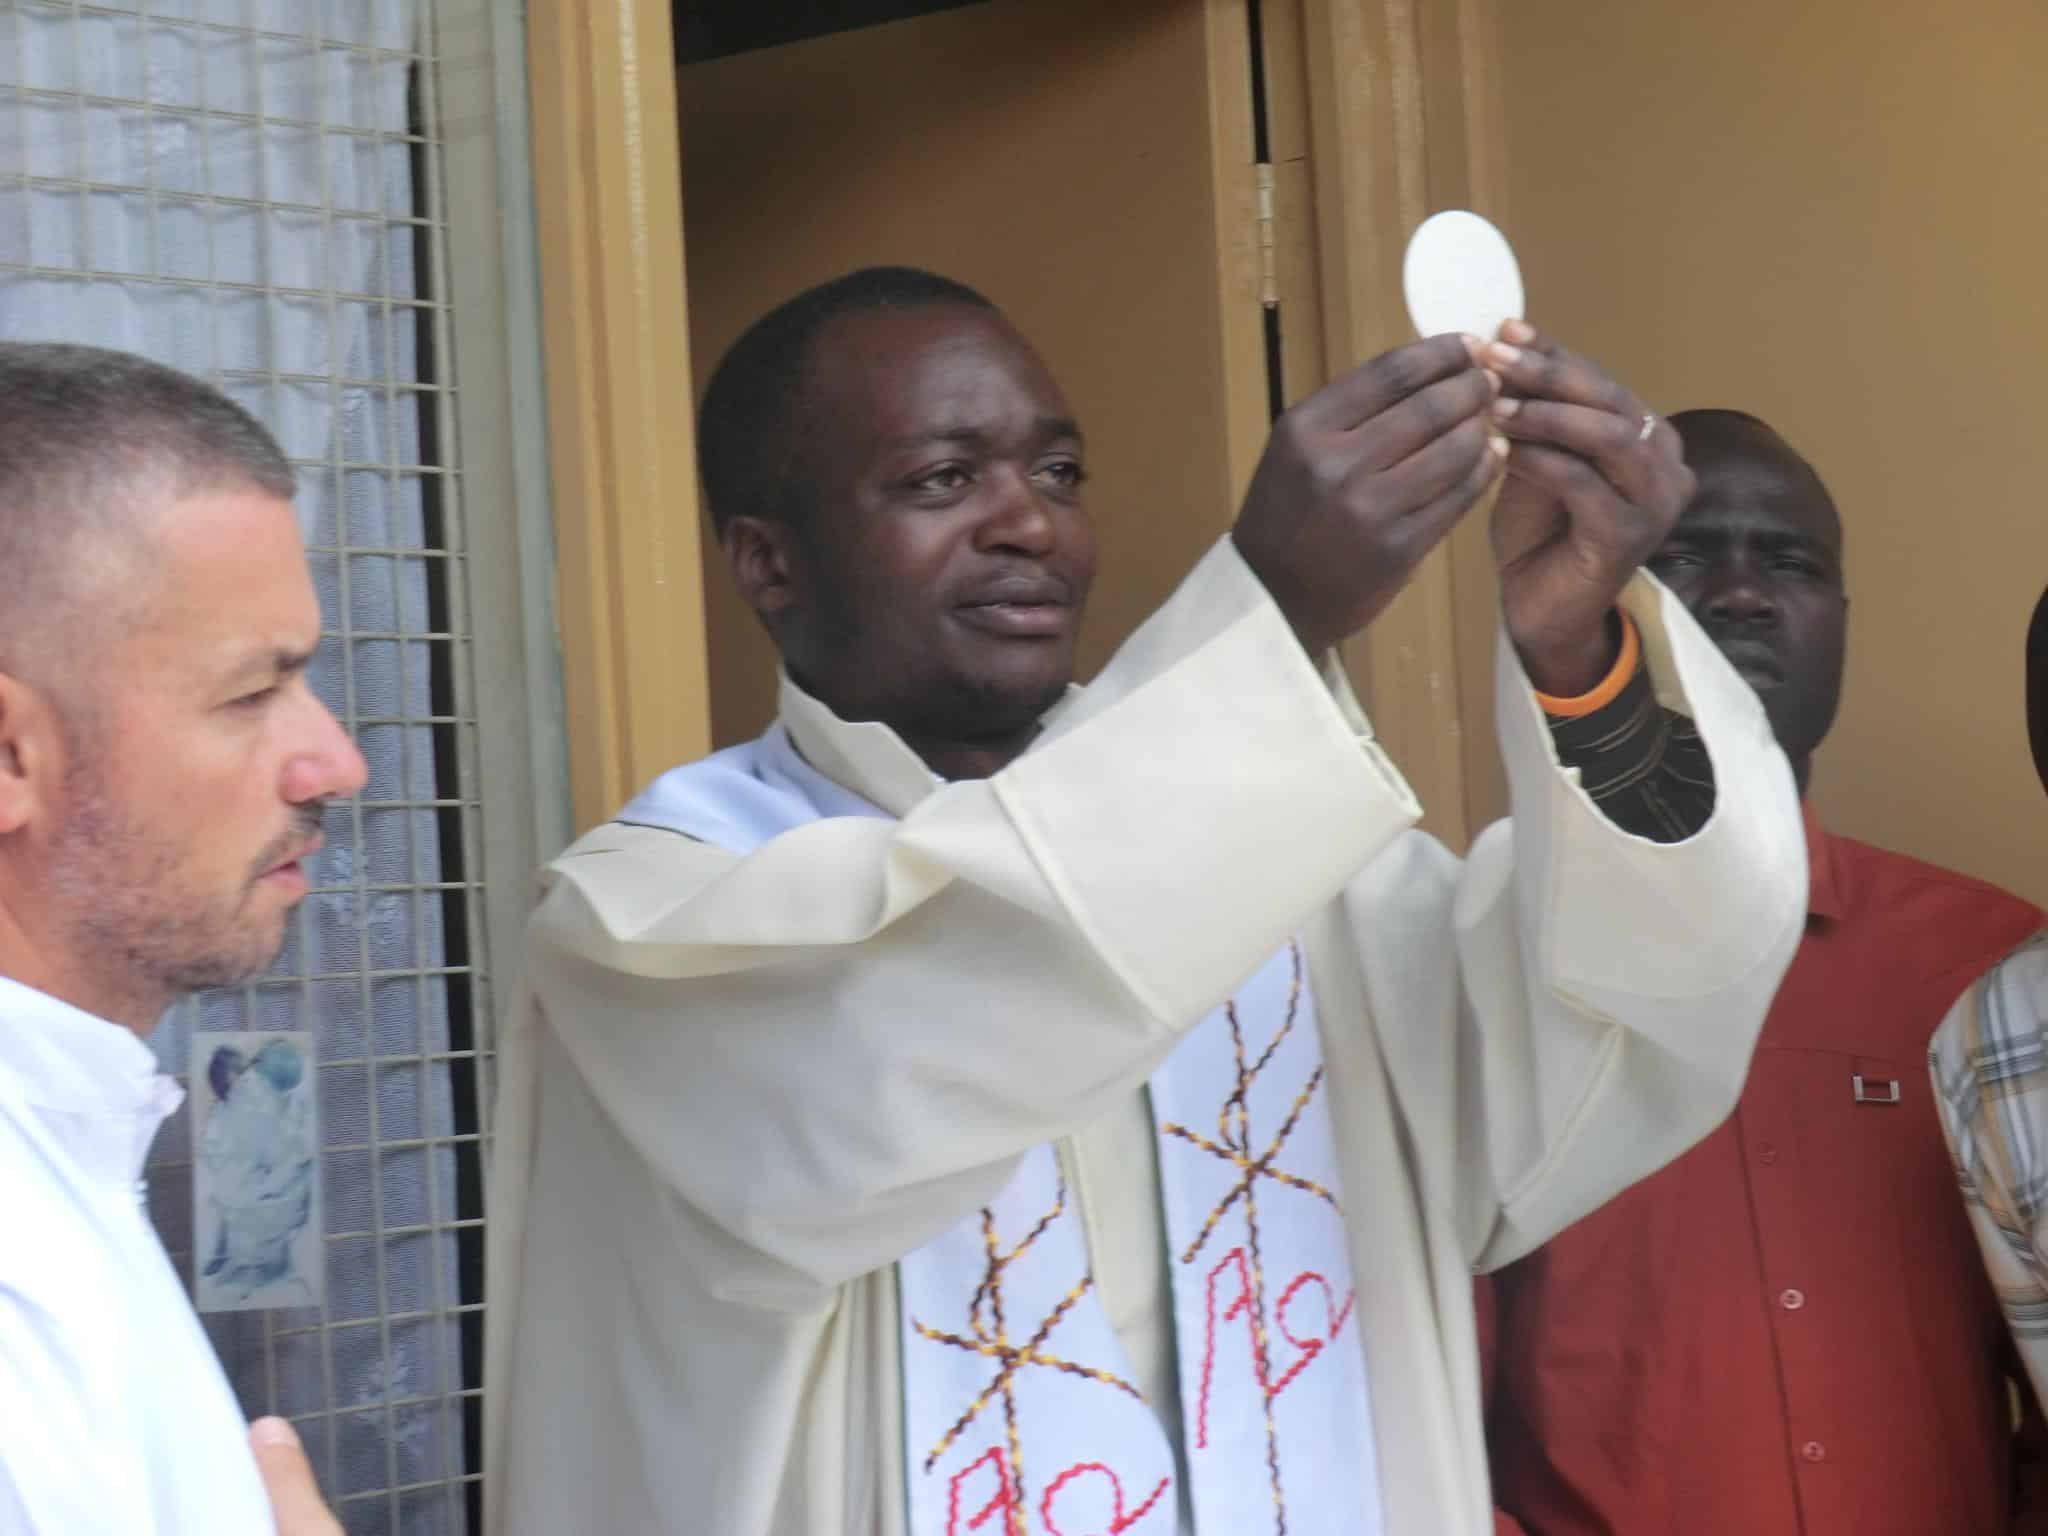 DEM.REP. CONGO / INONGO 13/84
Formation of the 49 seminarians of the diocese of Inongo, 2013-2014